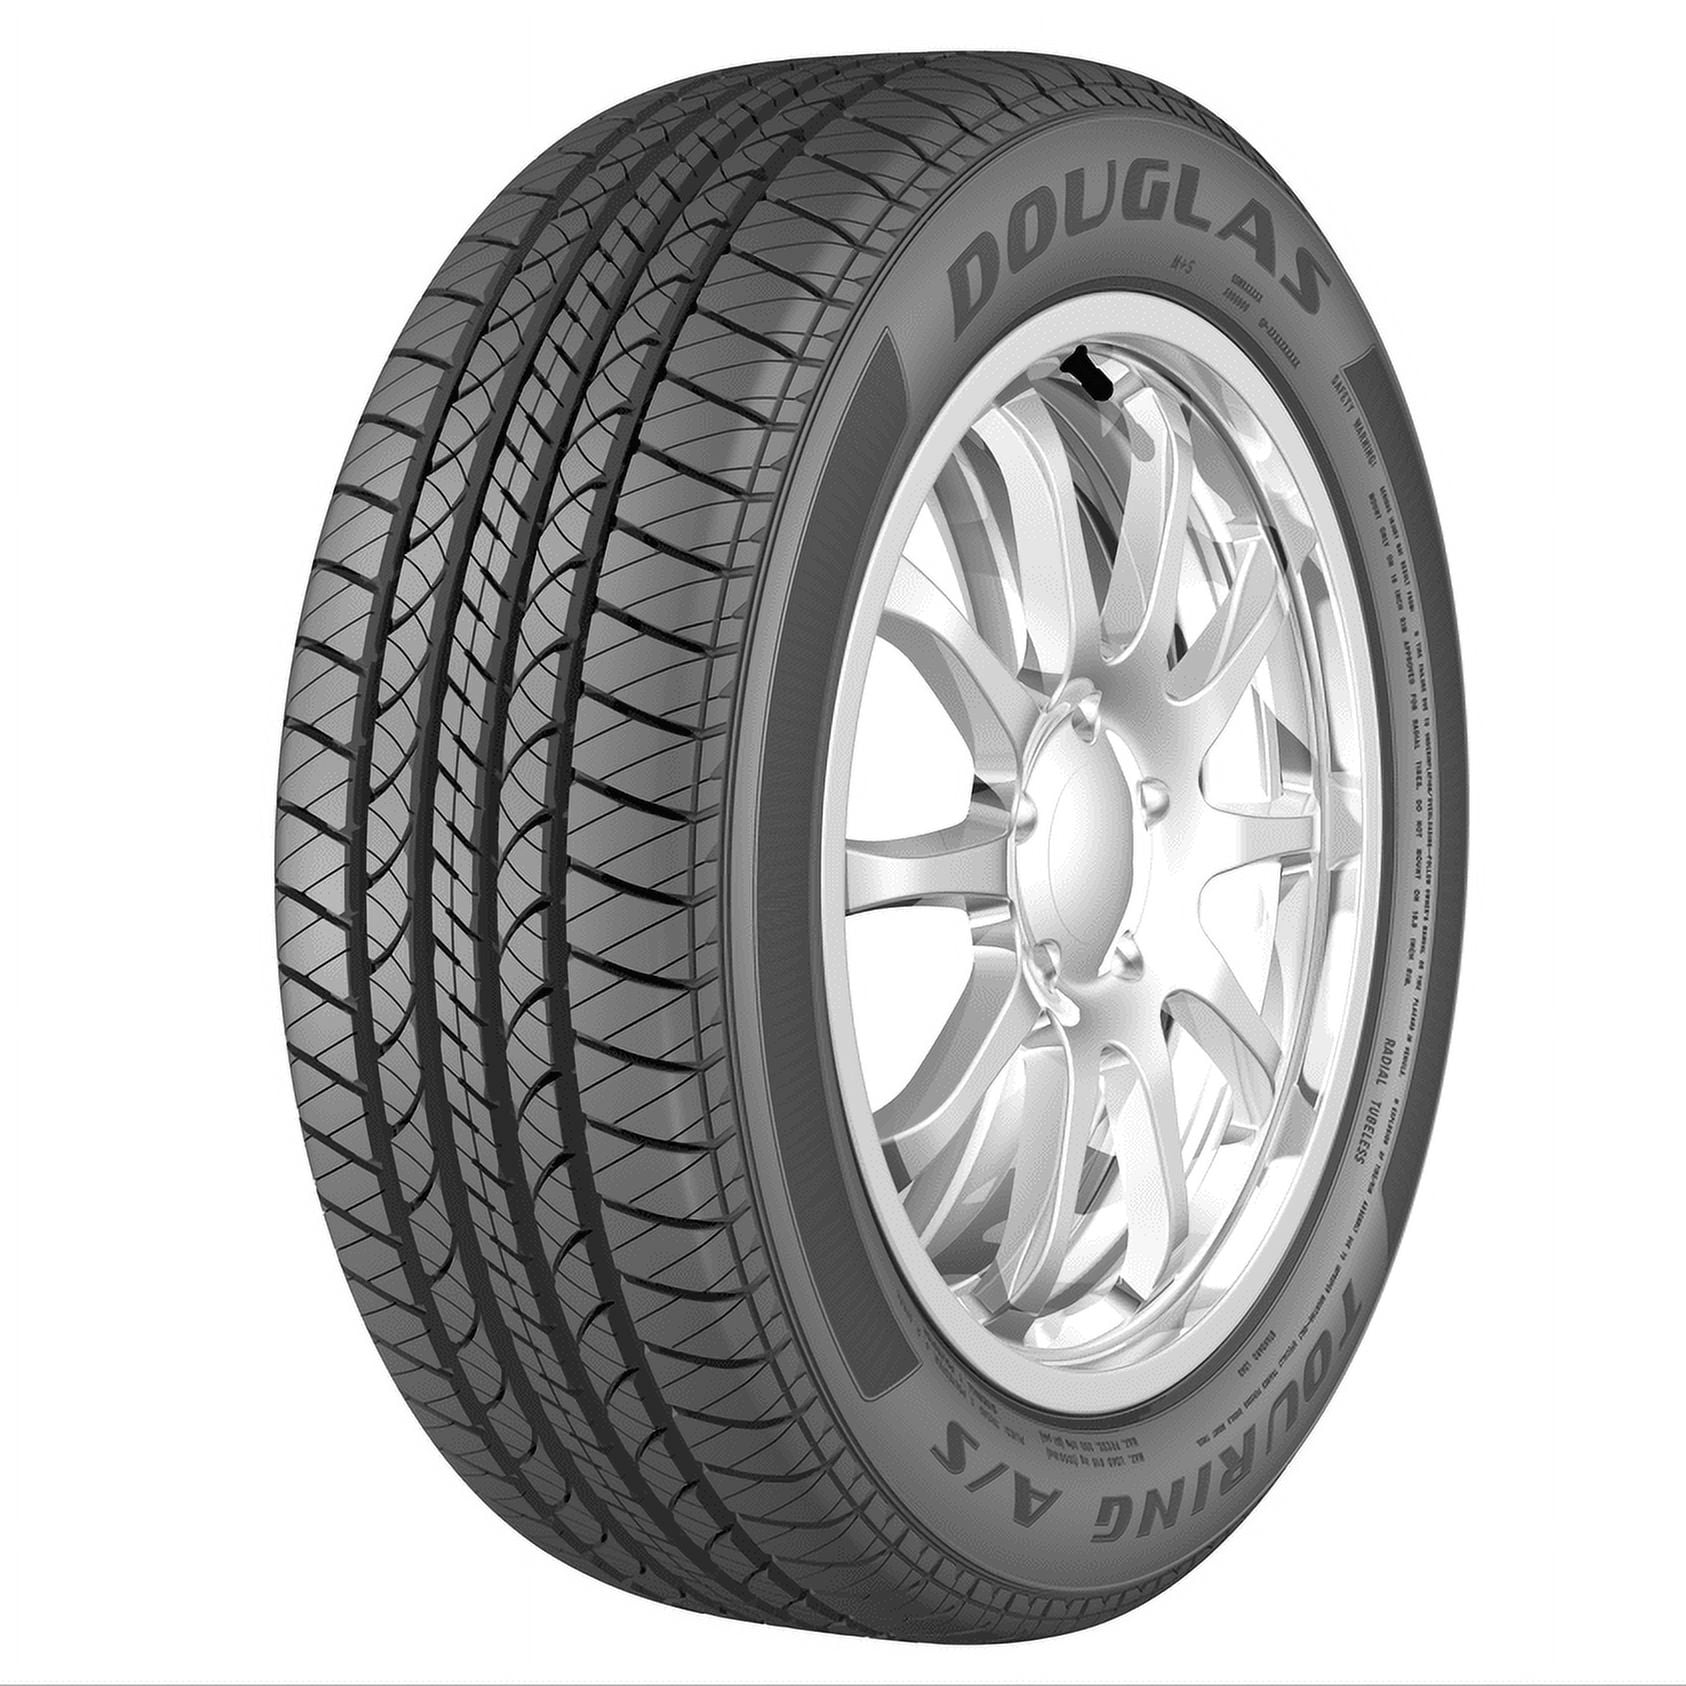  Iris Ecoris Summer Touring Radial Tire-175/65R14 175/65/14 175/ 65-14 86T Load Range XL 4-Ply BSW Black Side Wall : Automotive